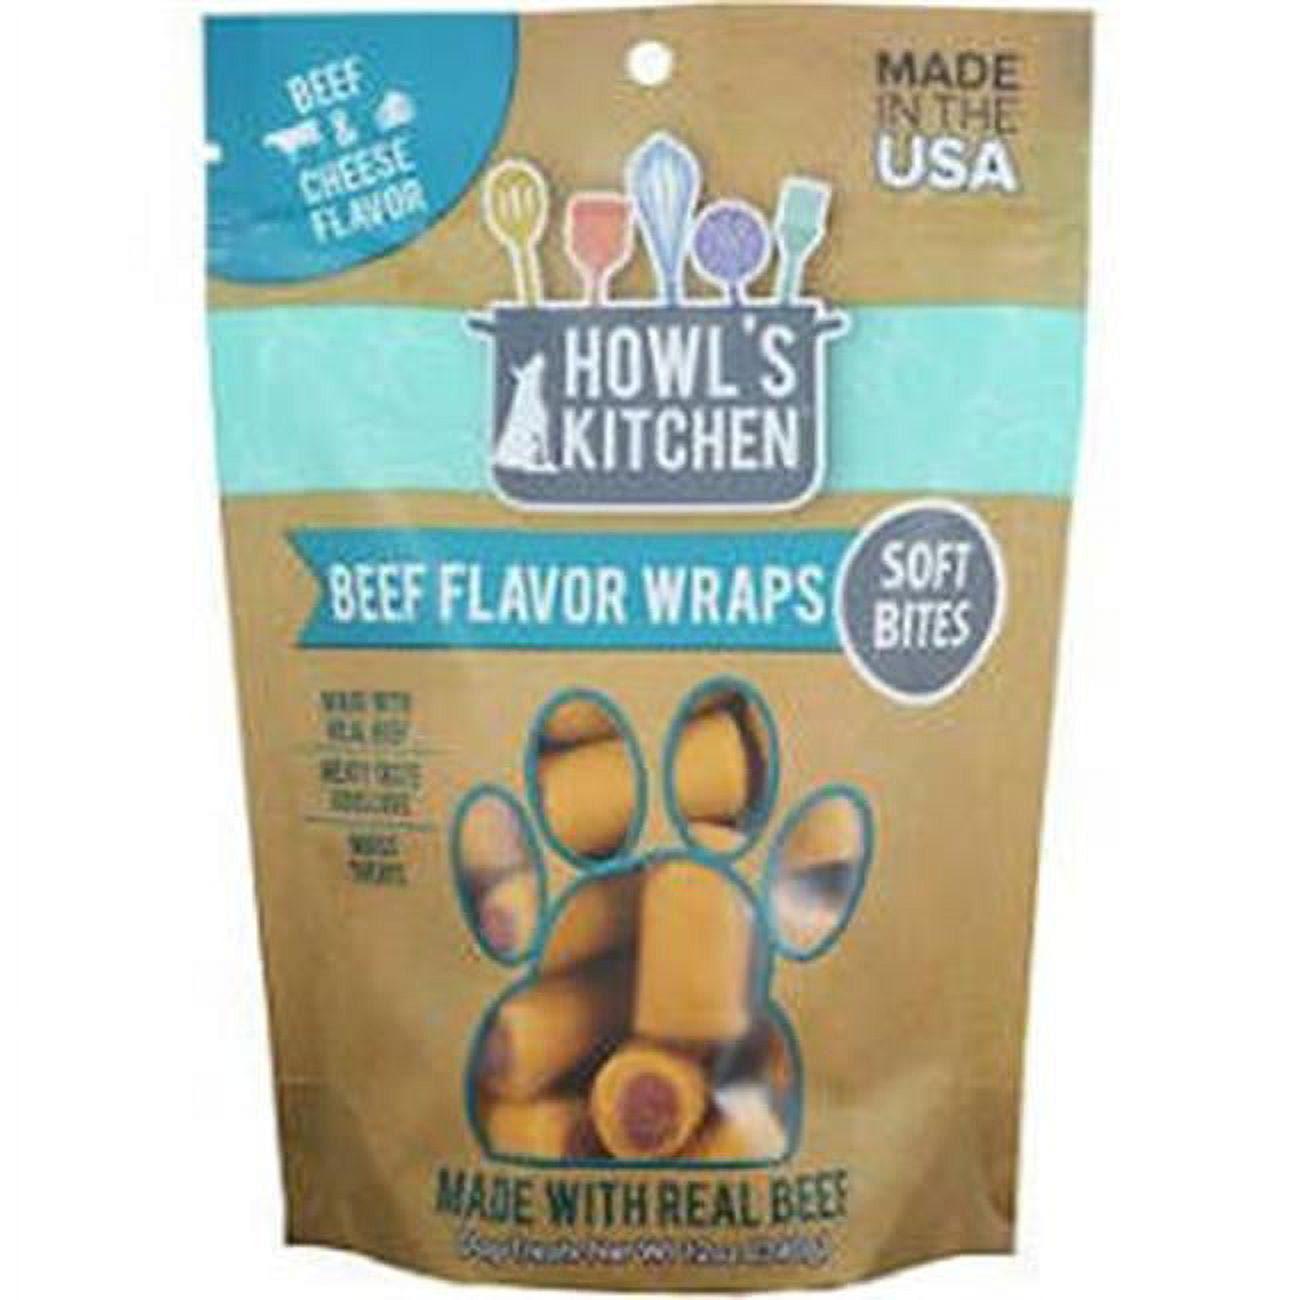 12 Oz Howls Kitchen Beef & Cheese Flavor Wrap Dog Treats